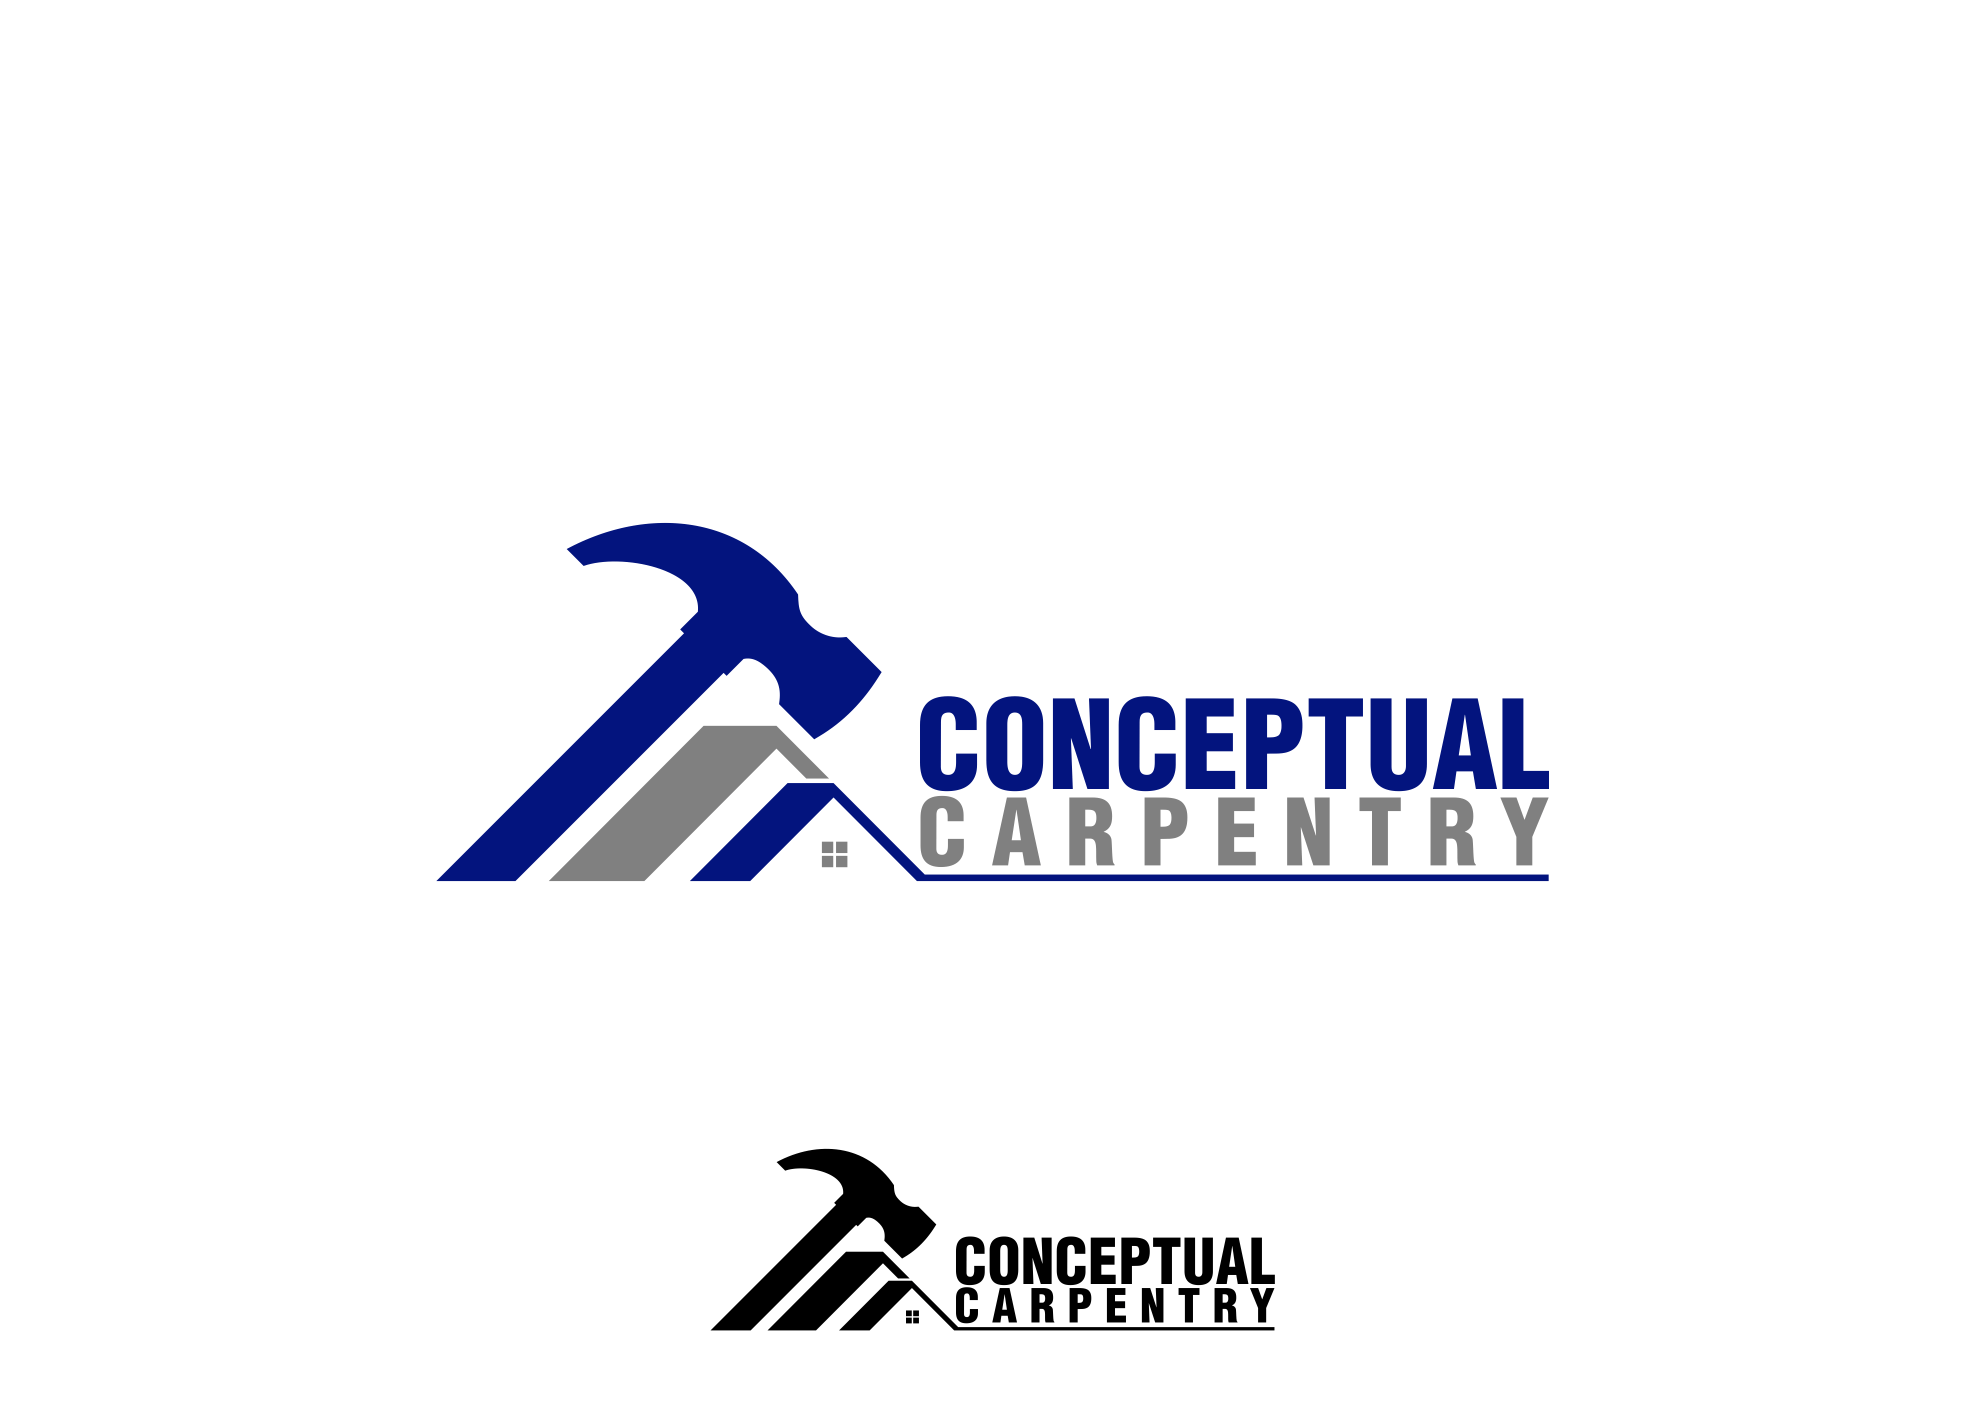 Carpentry Company Logo - Serious, Modern, Construction Company Logo Design for Conceptual ...